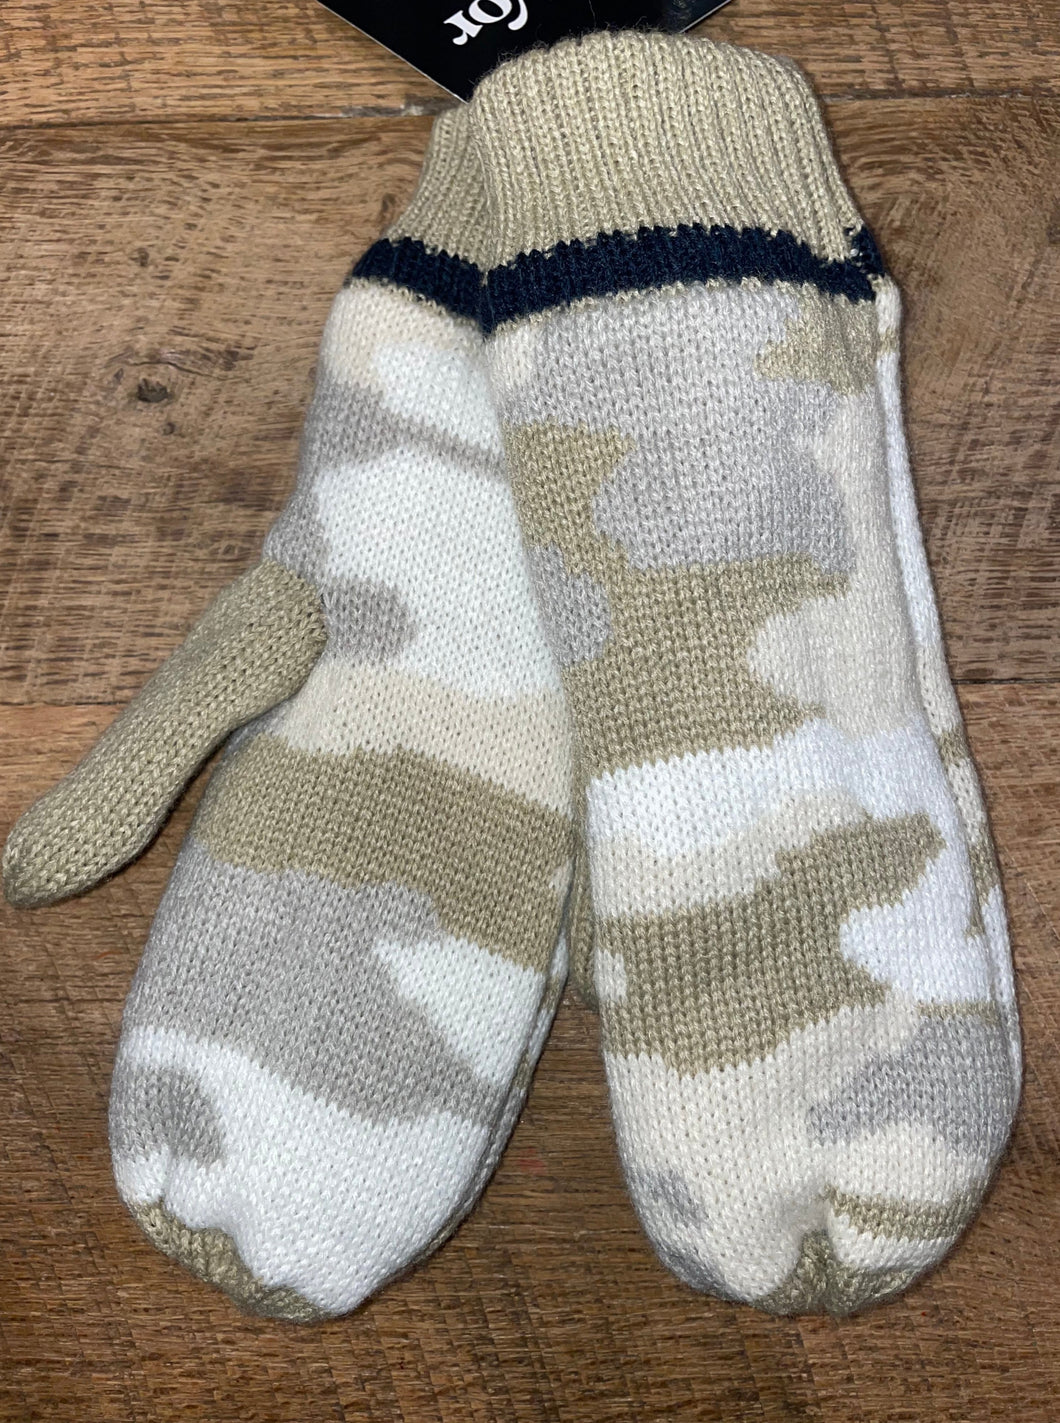 Camo knit mitten with stripe  Fleece lined